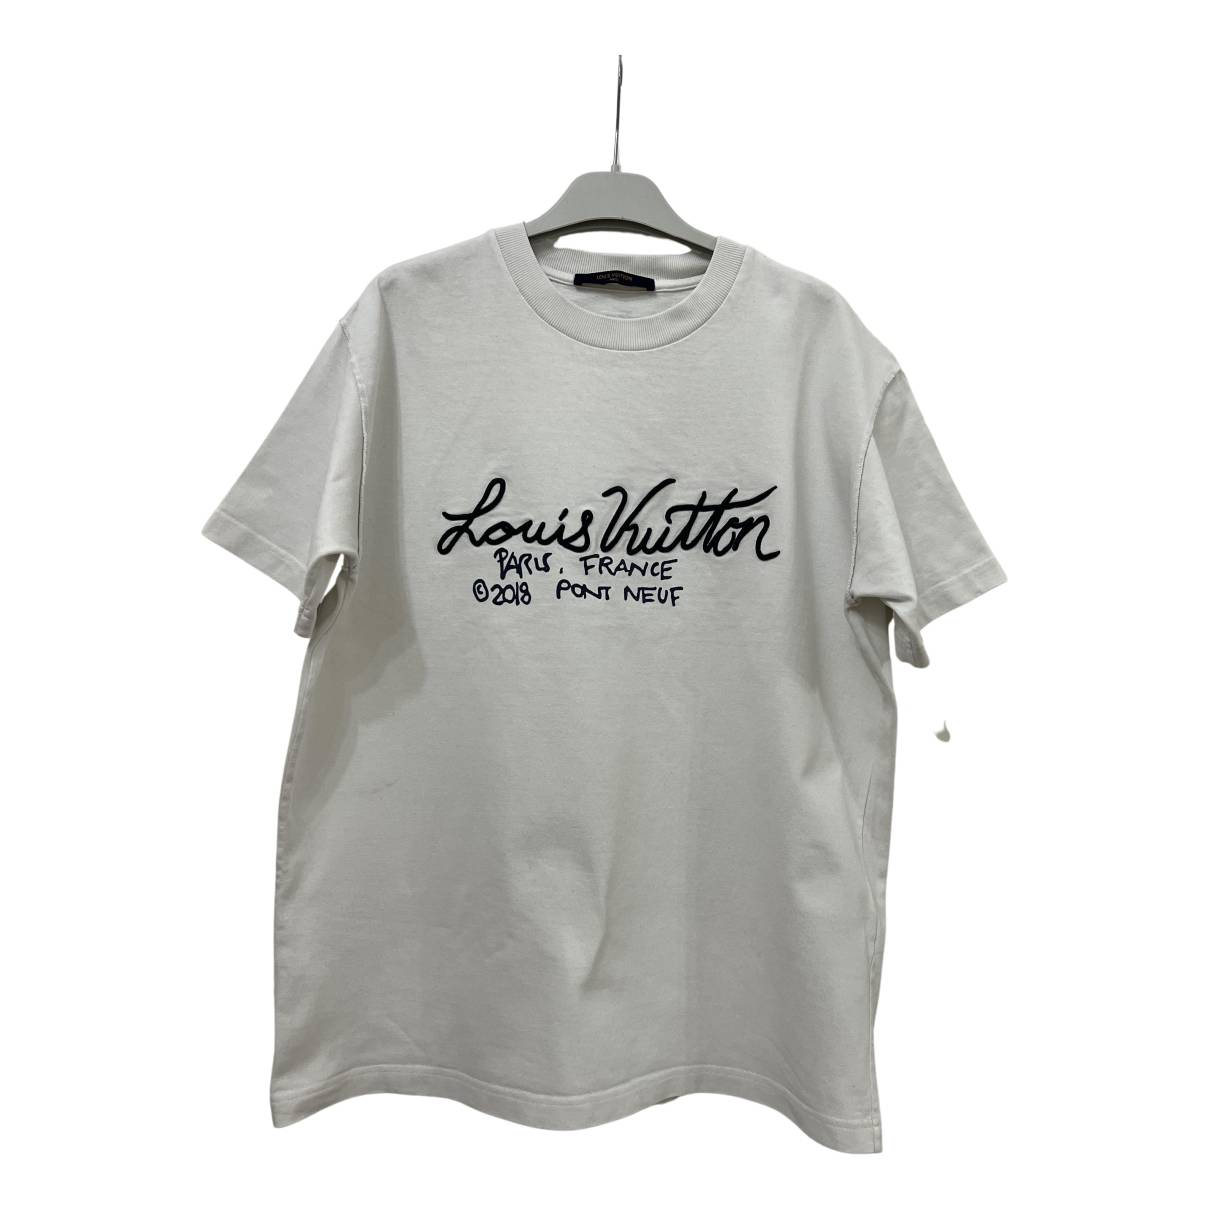 T-shirt Louis Vuitton White size M International in Cotton - 33394294